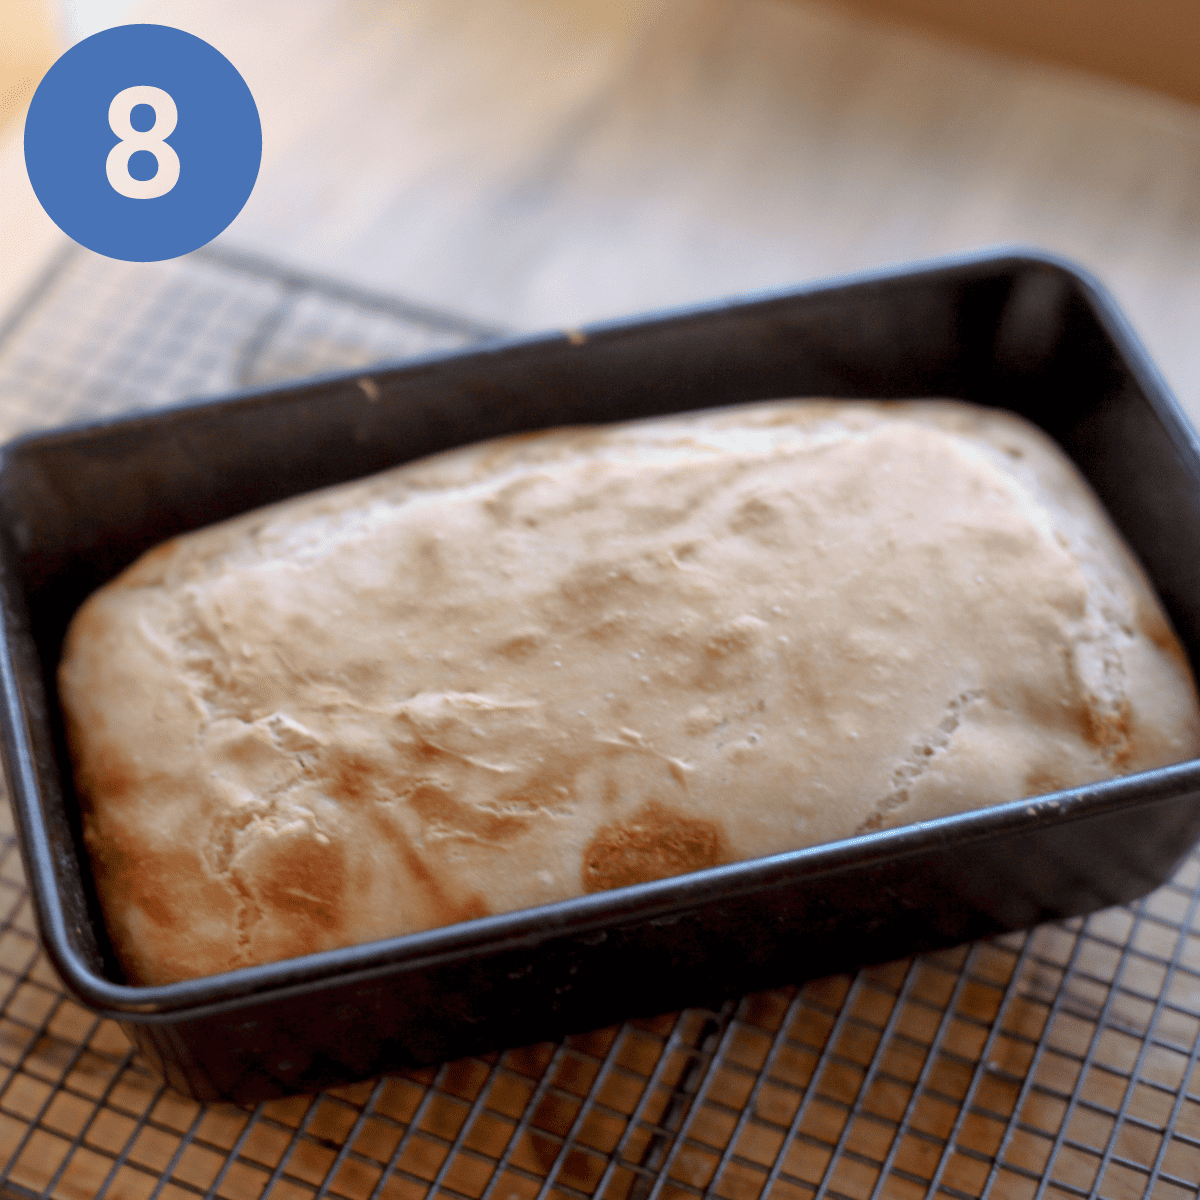 The baked loaf!